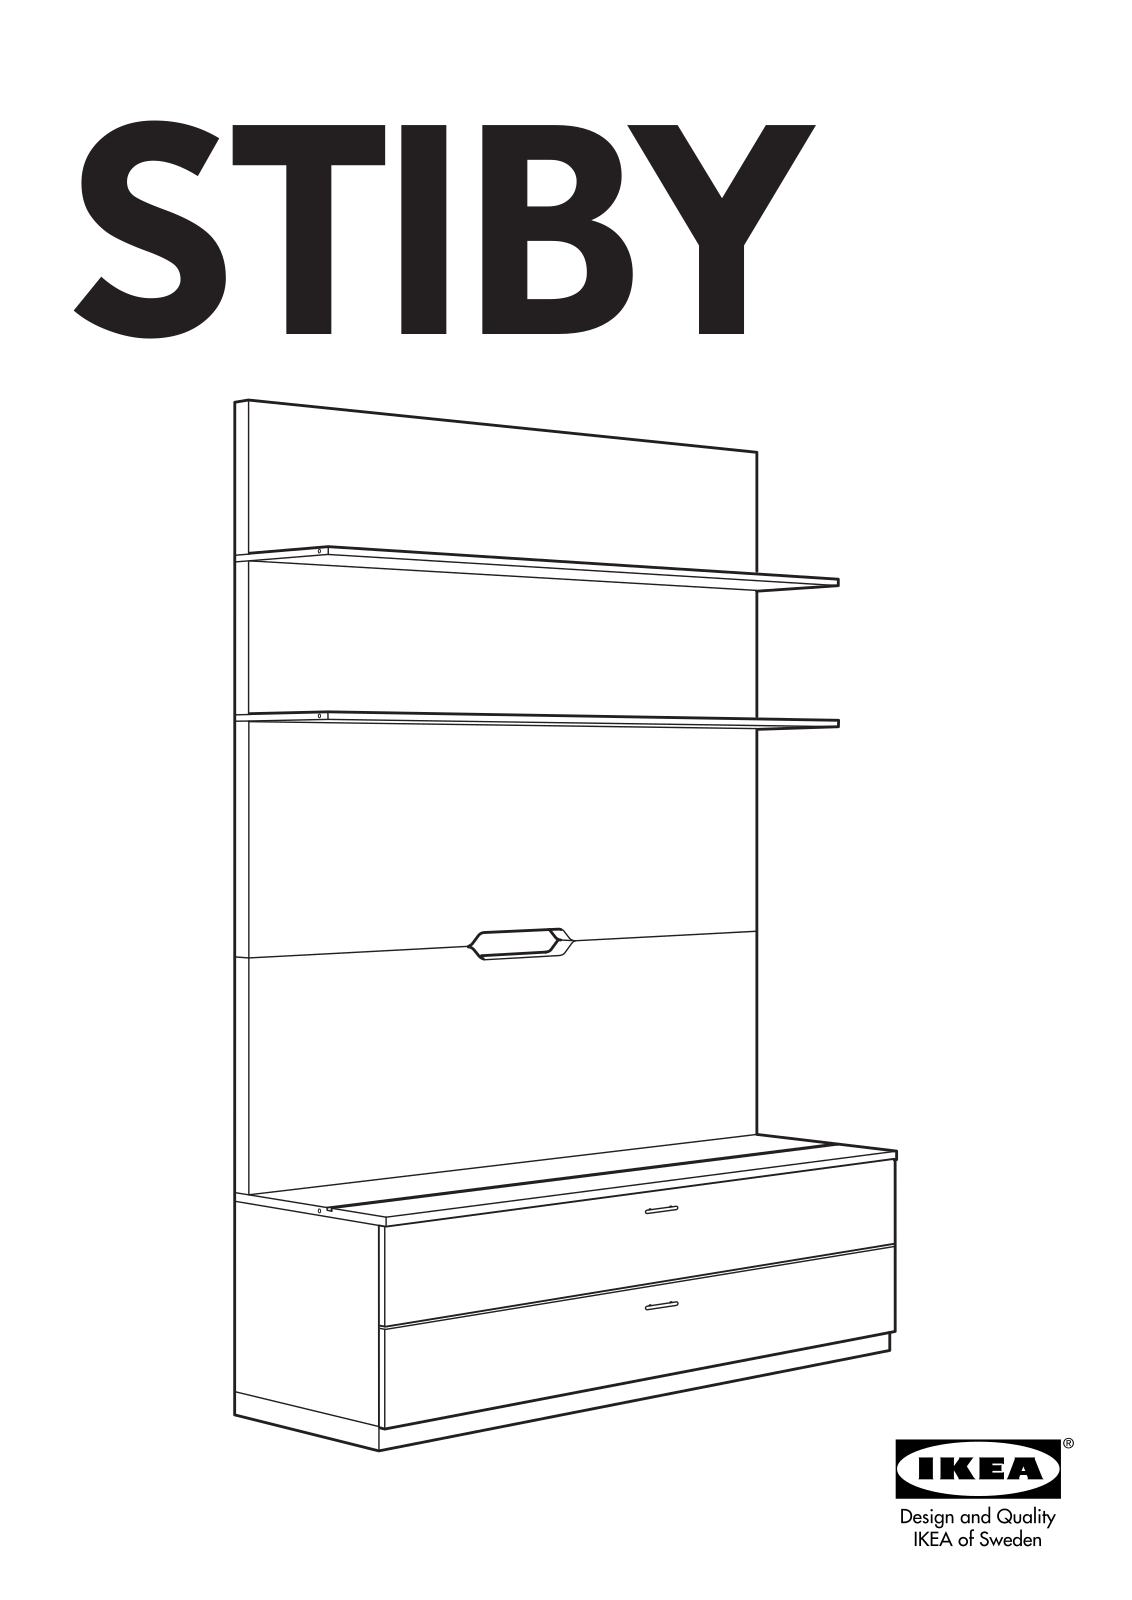 IKEA STIBY TV PANEL W MEDIA STORAGE Assembly Instruction